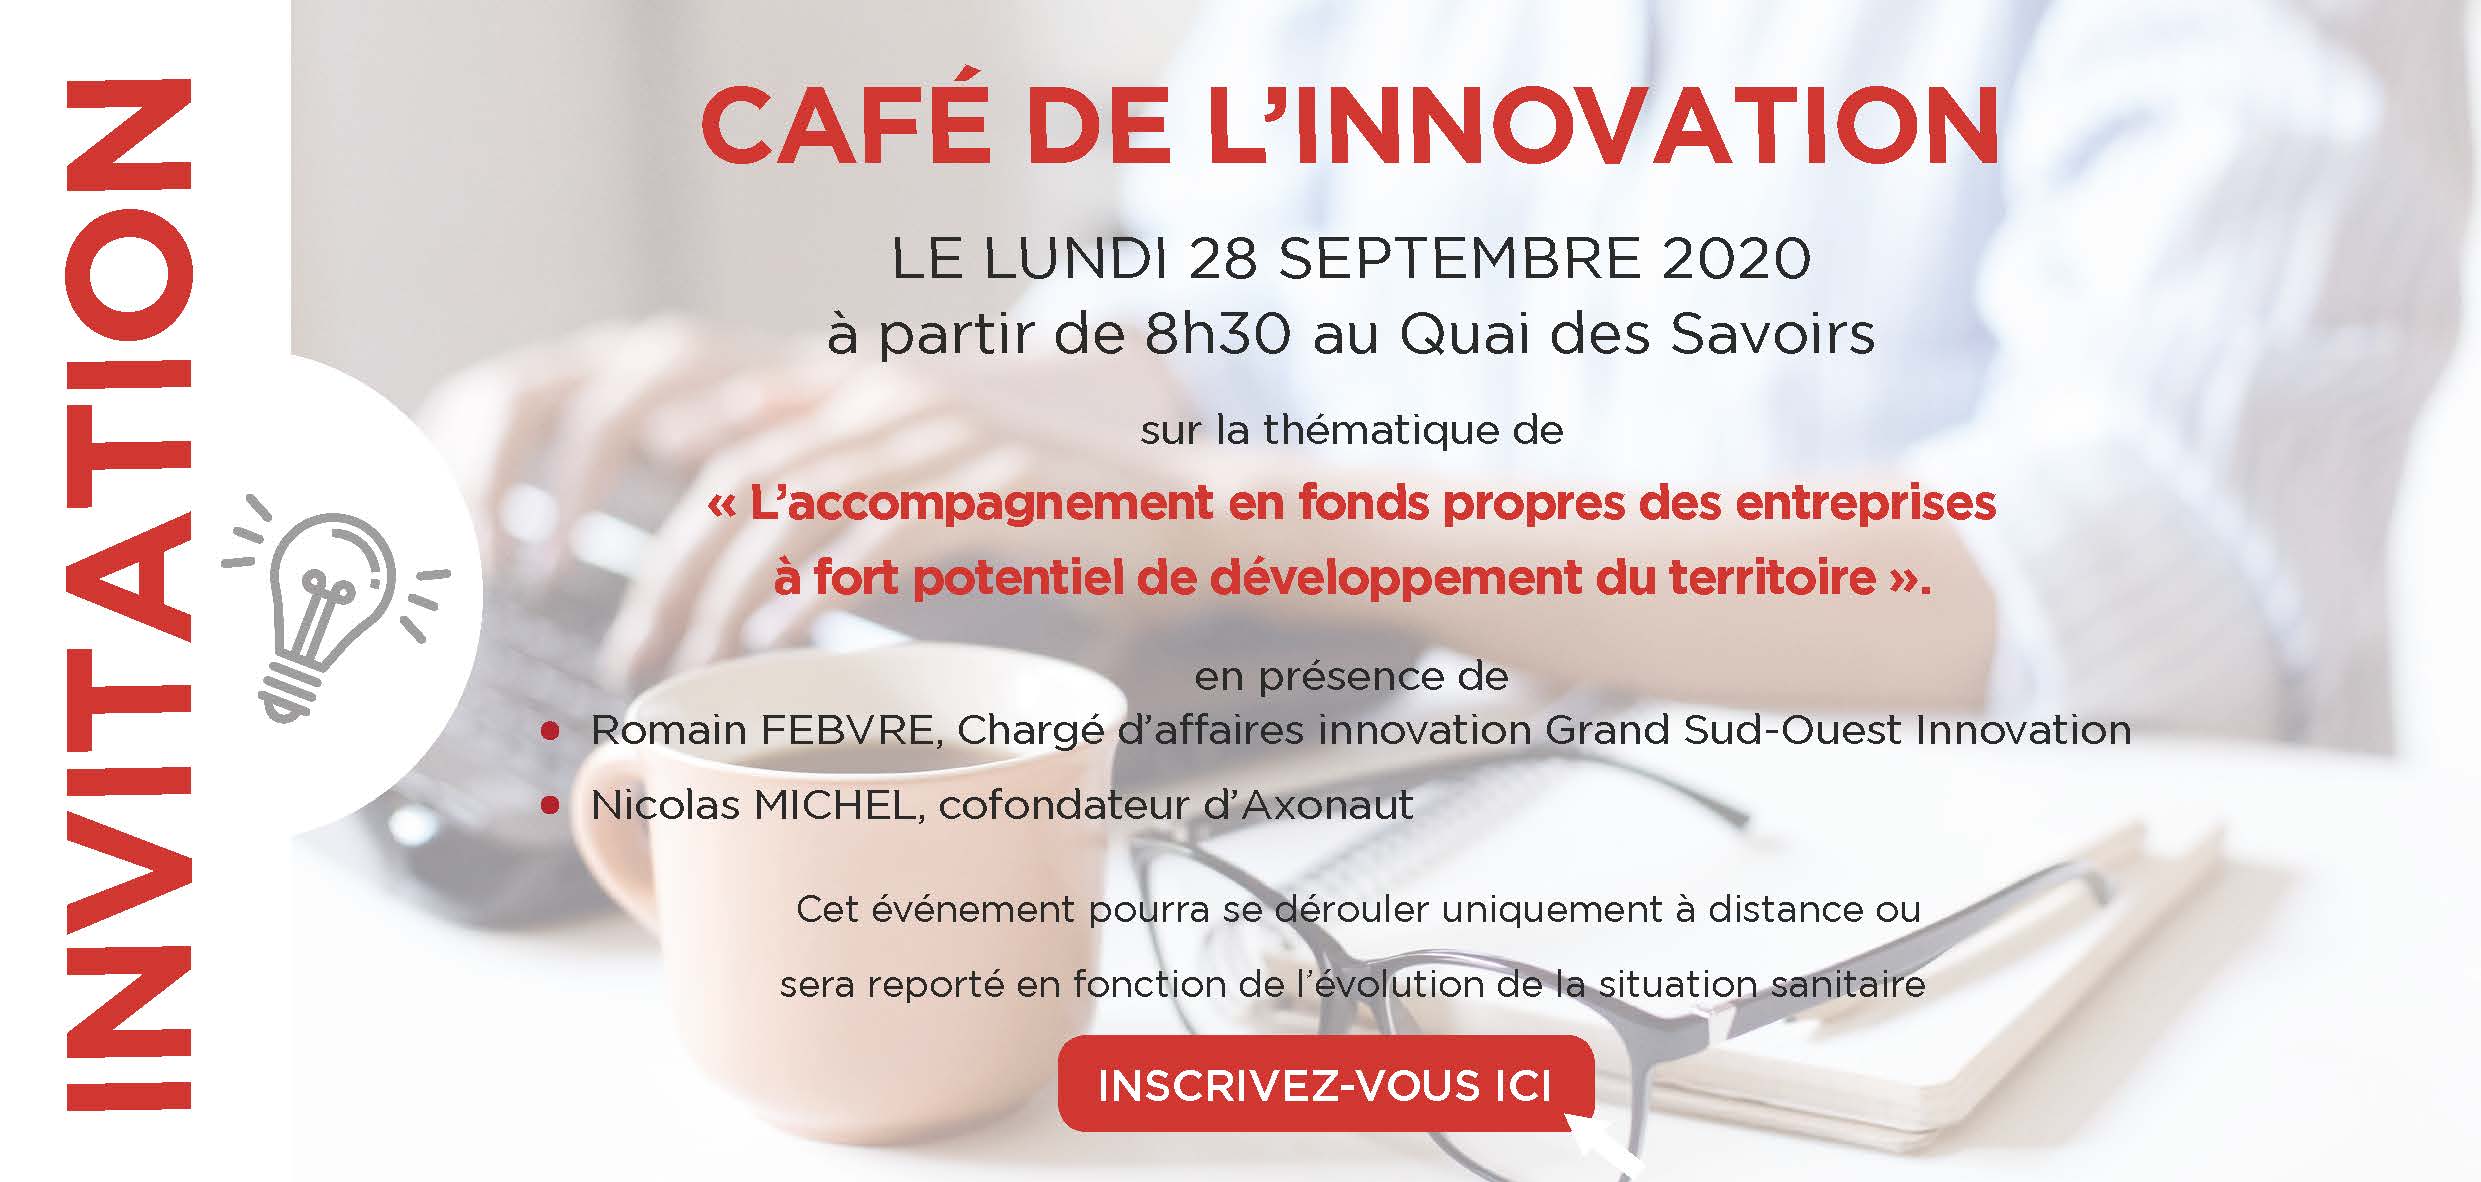 Invitation - Cafe de l'innovation-28-09-2020- Generique-V3